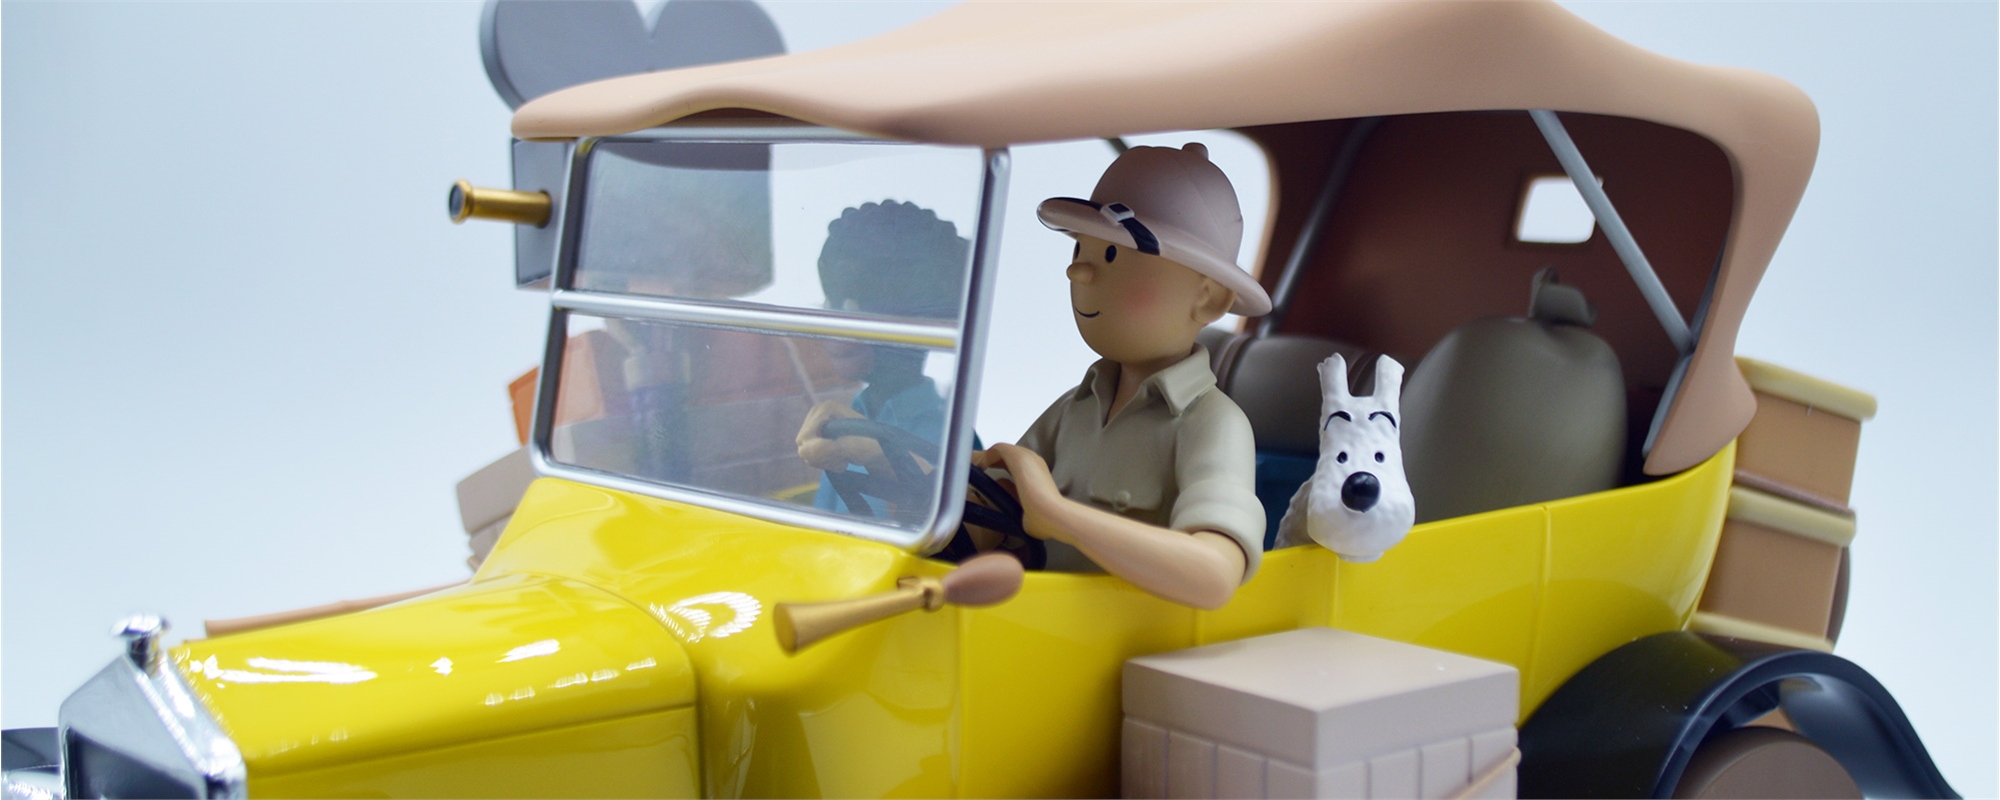 La voiture jaune de Tintin au Congo